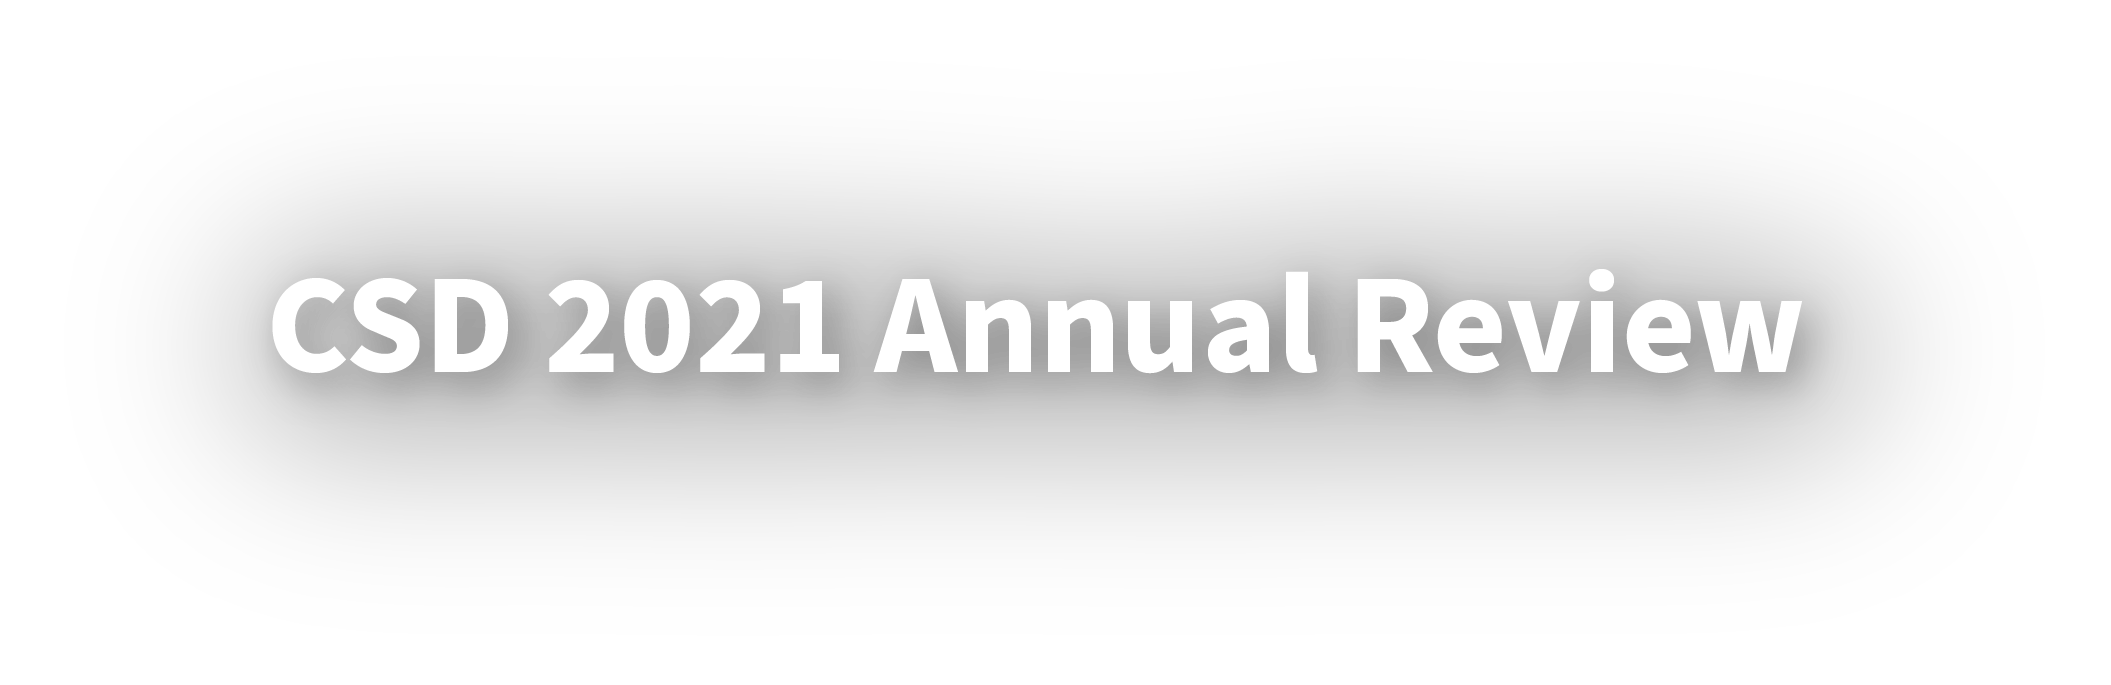 CSD 2021 Annual Review